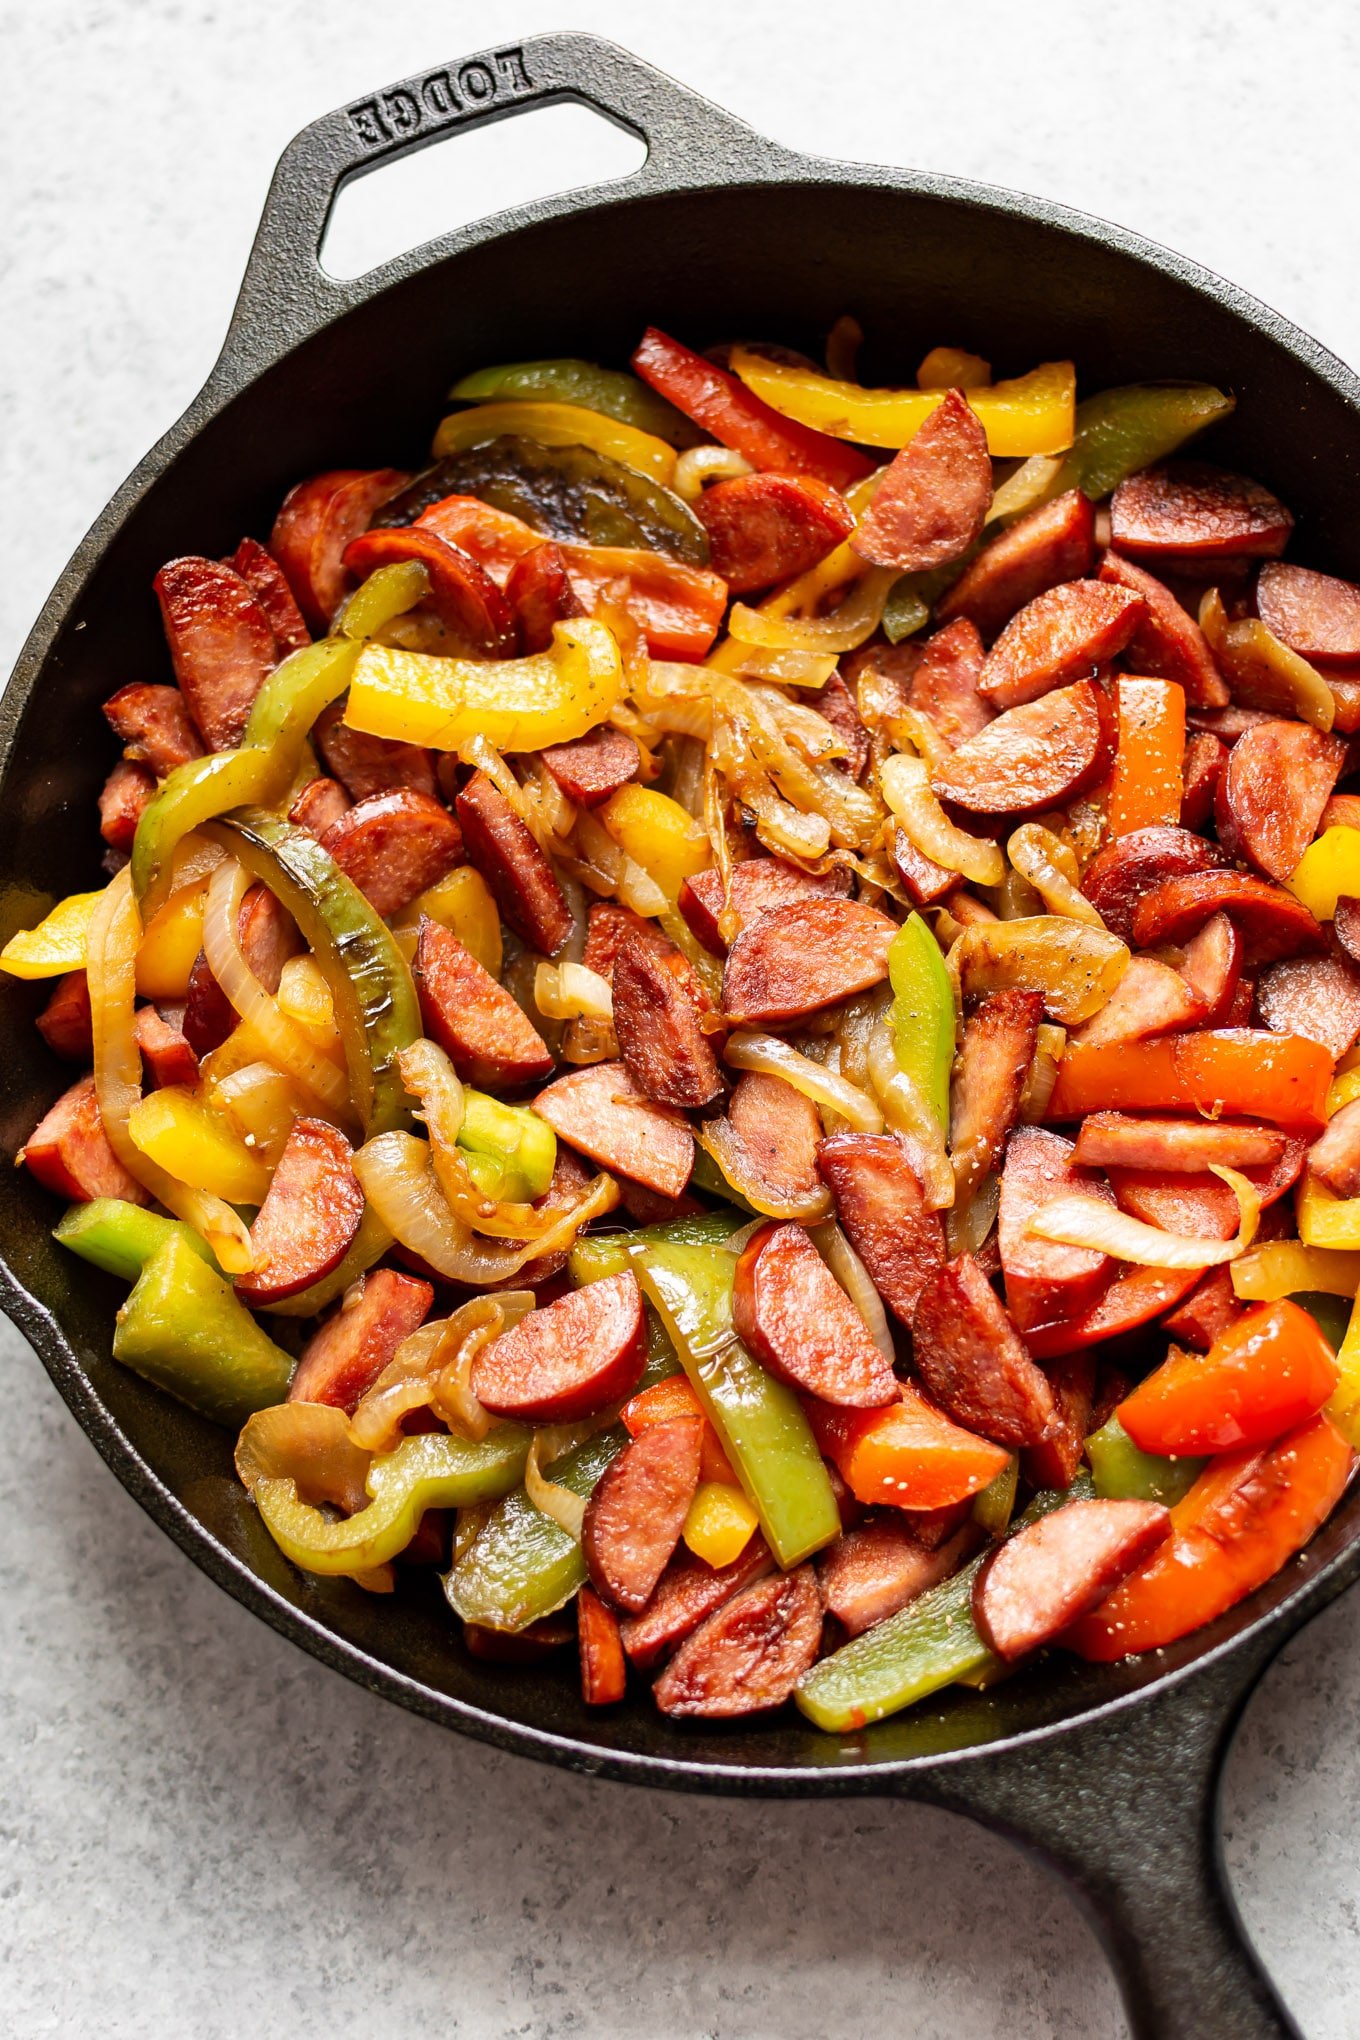 https://www.saltandlavender.com/wp-content/uploads/2020/05/sausage-and-peppers-recipe-3.jpg